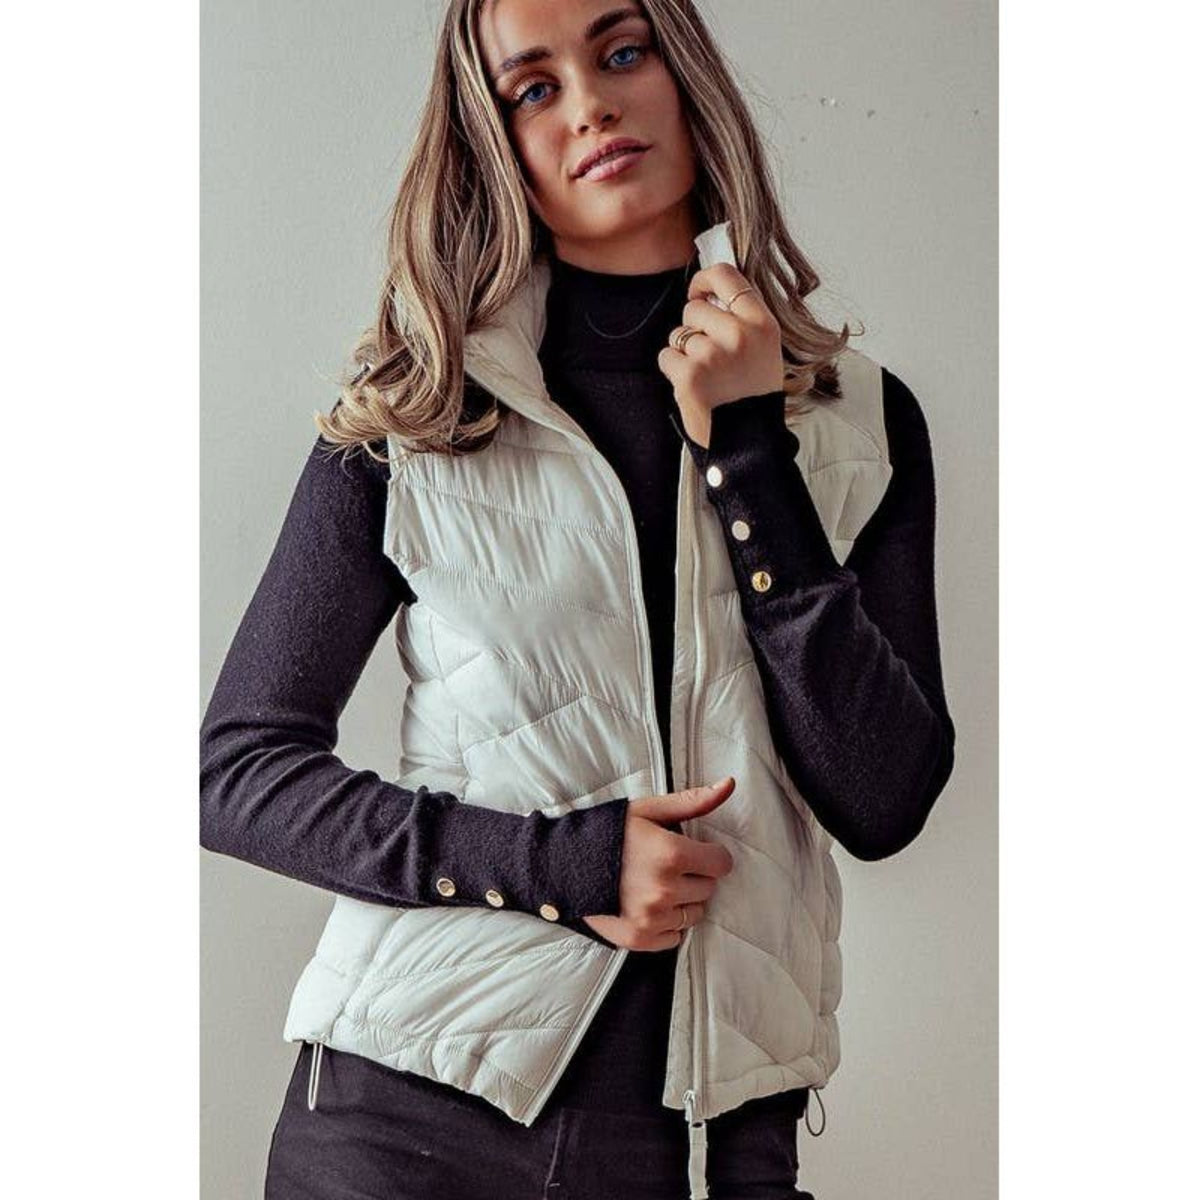 High neck zip up puffer vest (white); women's apparel